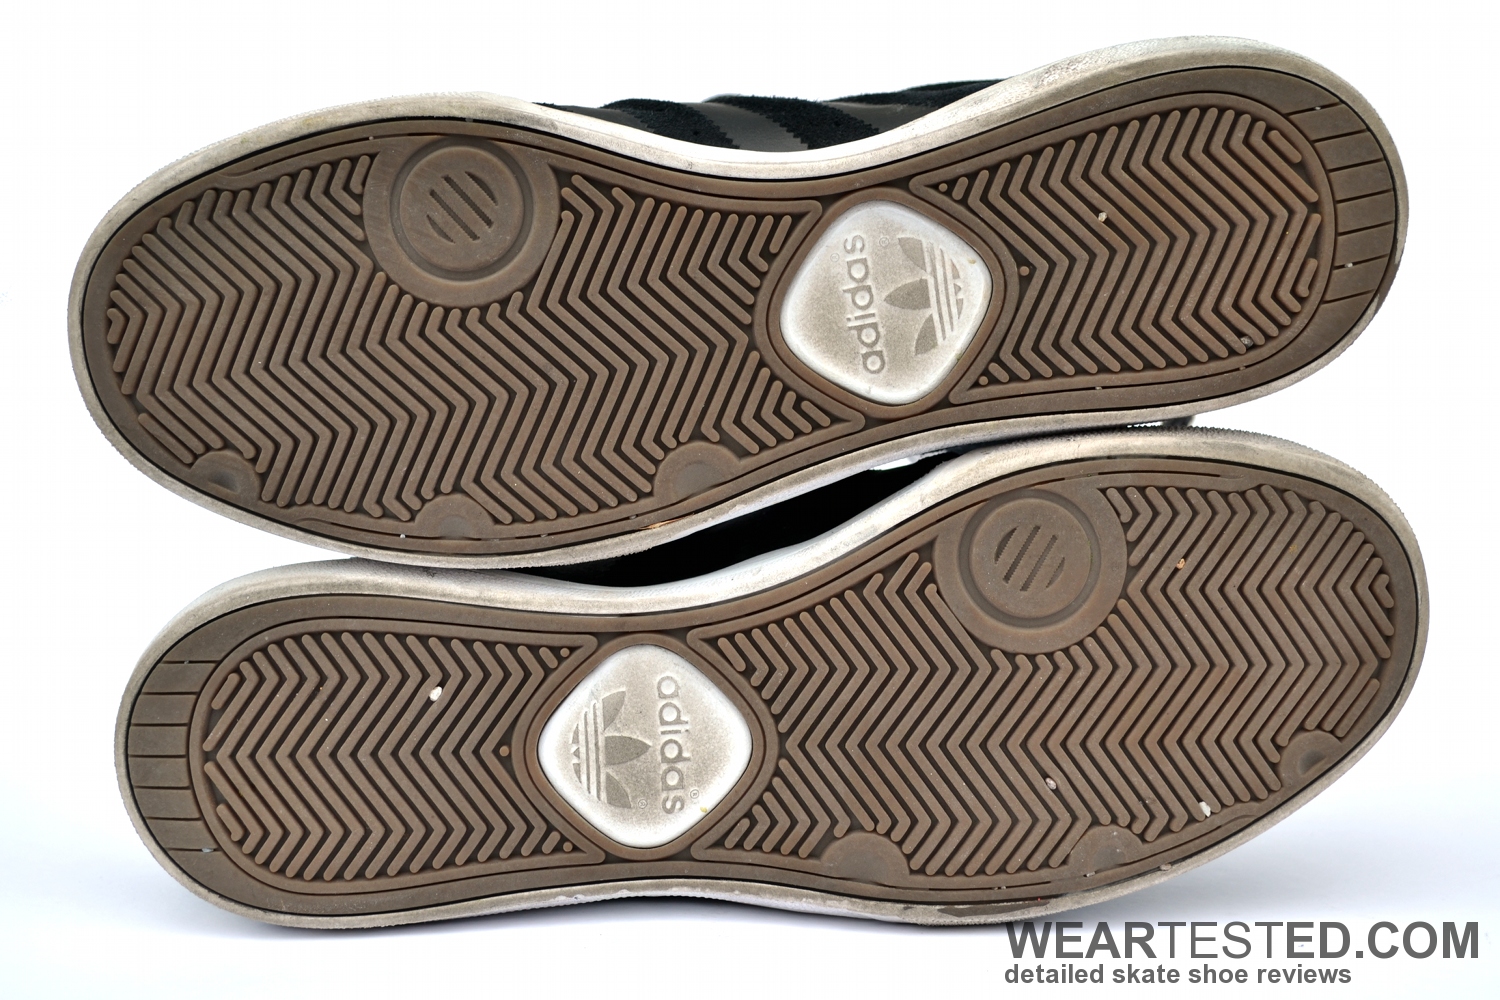 adidas shoe sole patterns